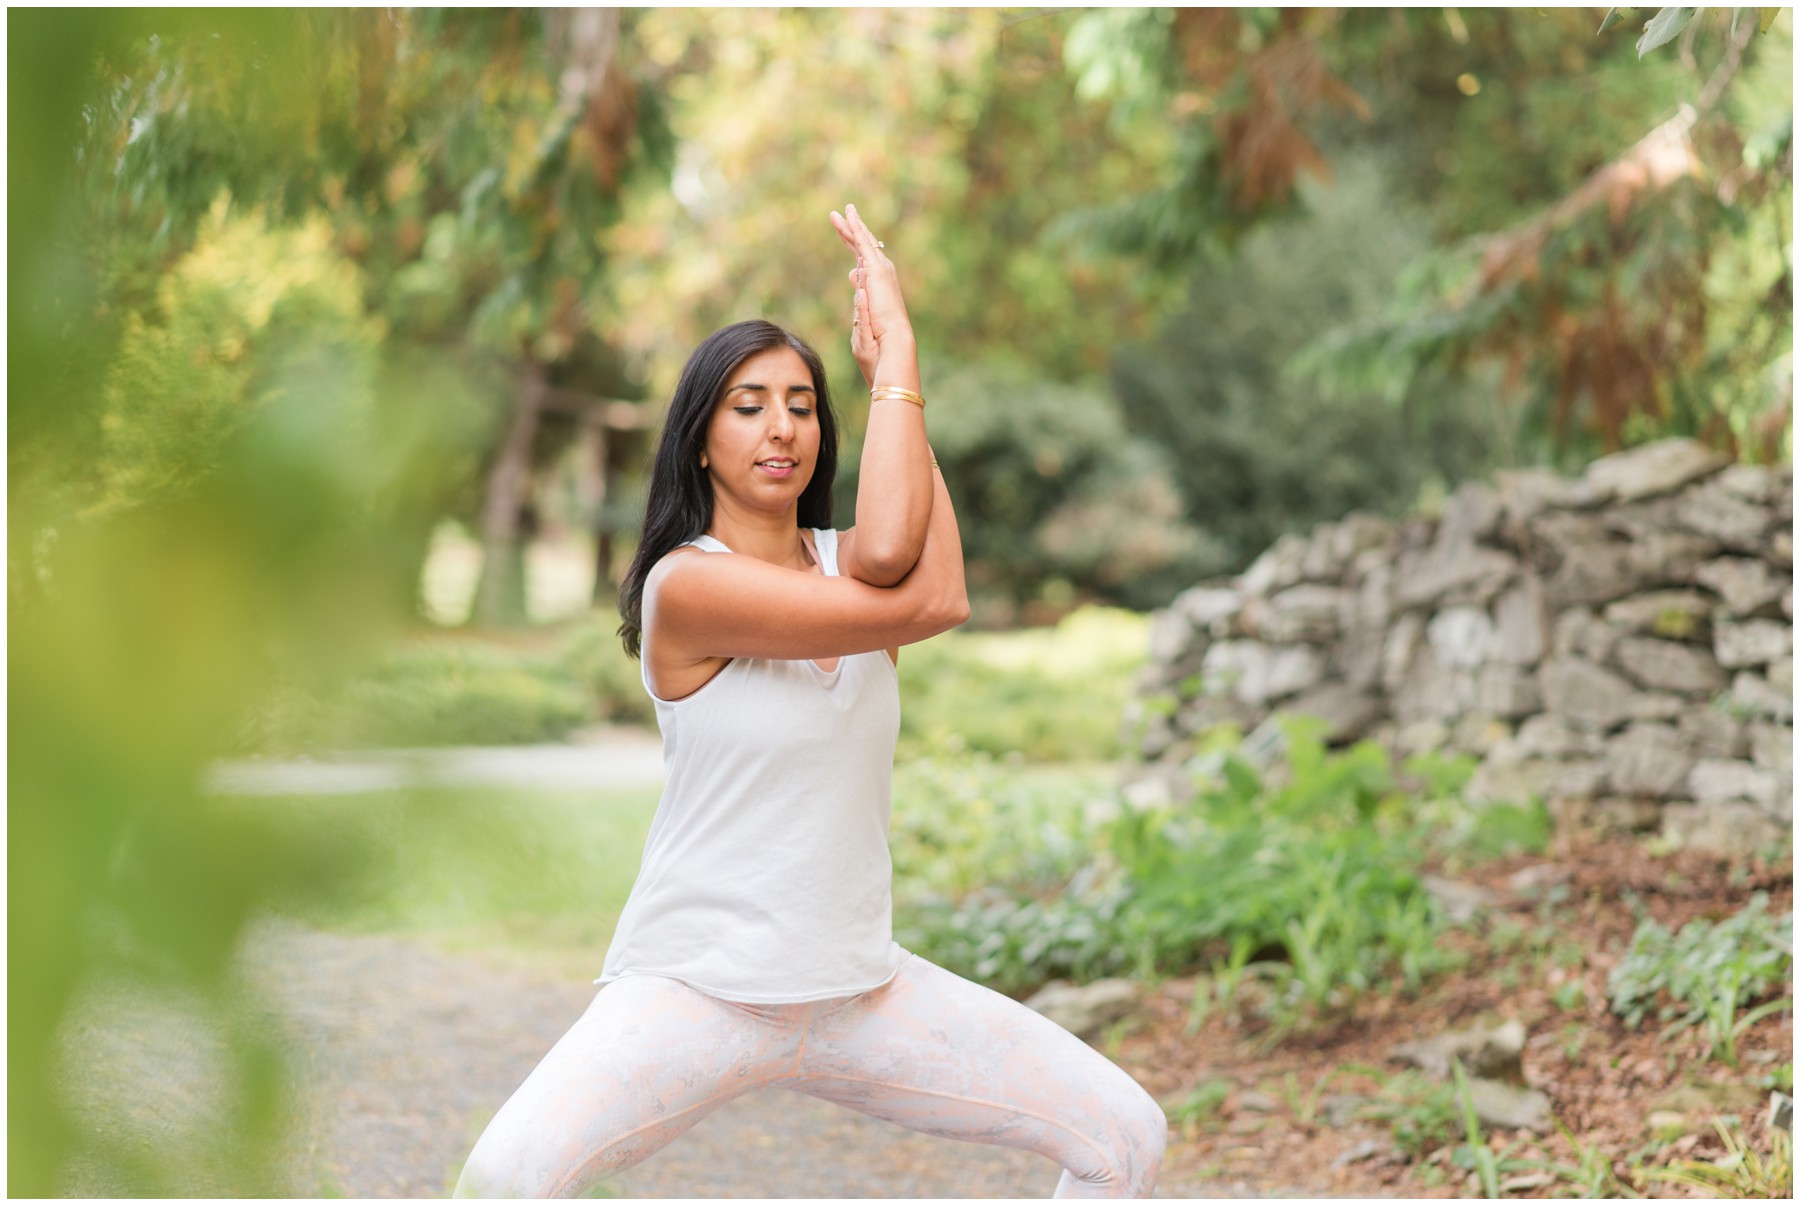 Sabina Grewal yoga poses at Blandy Arboretum by Jacqueline Morgan